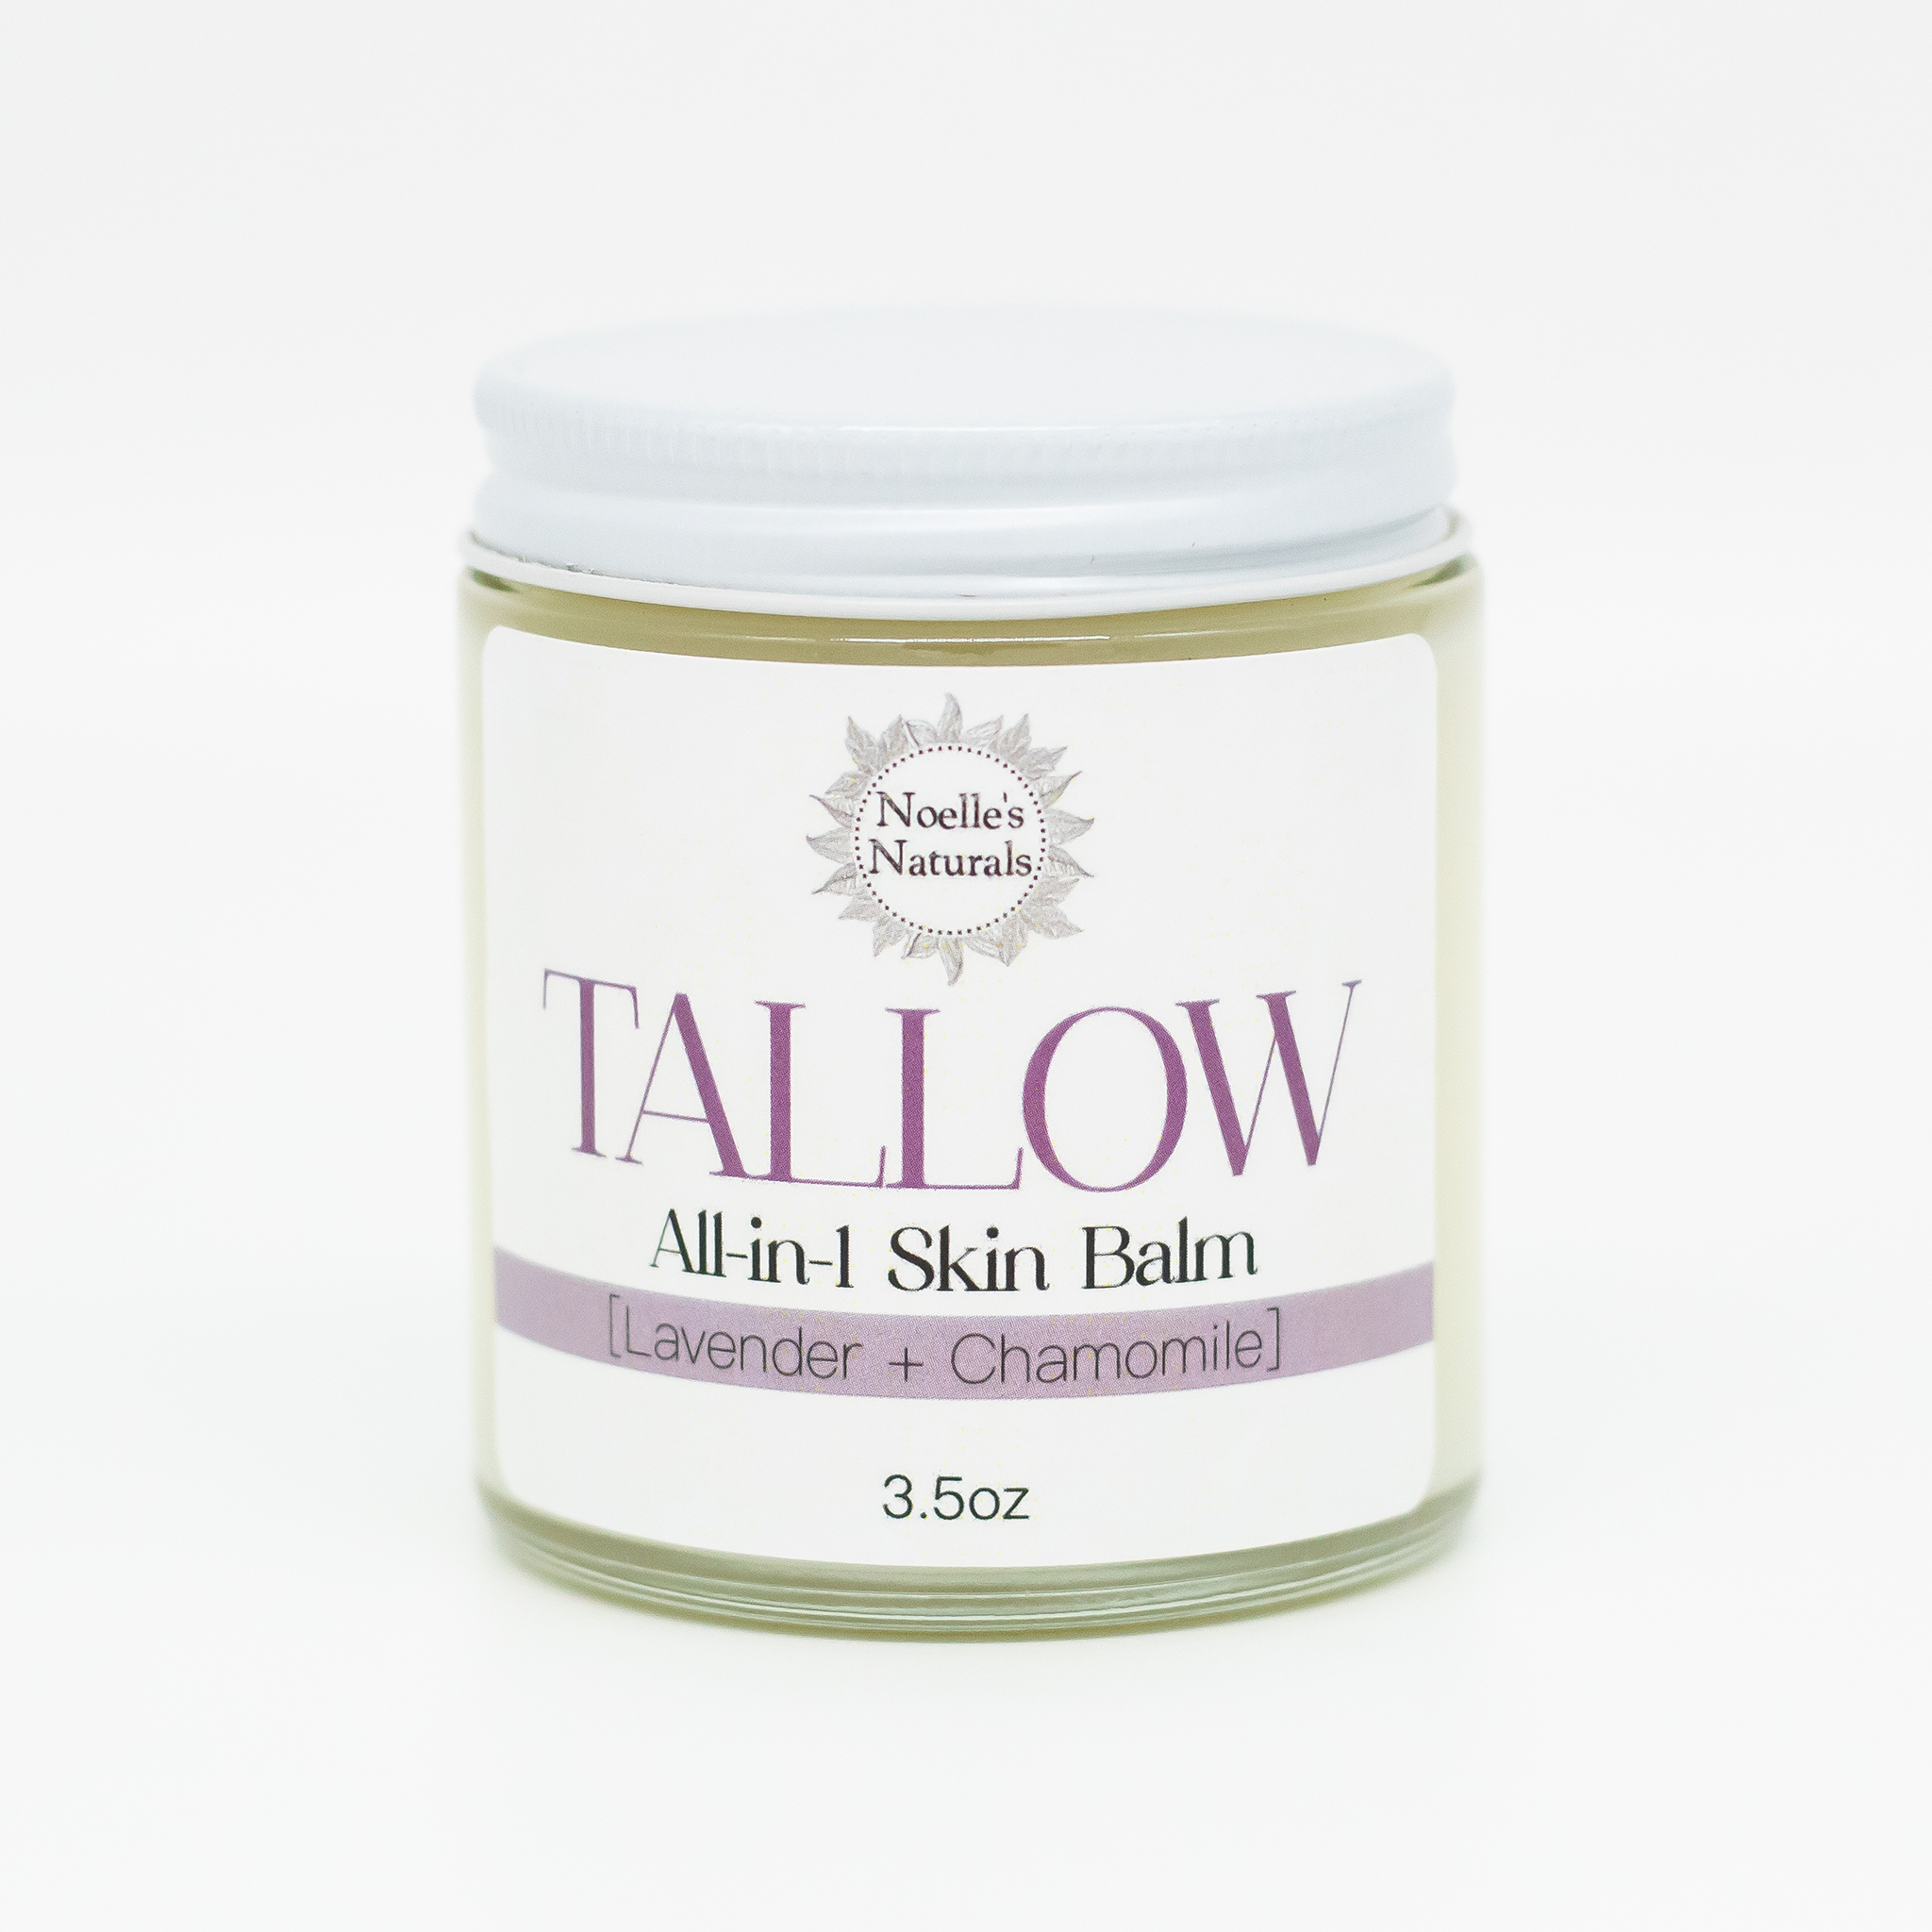 Organic Tallow Balm - Lavender + Chamomile - 3.5oz